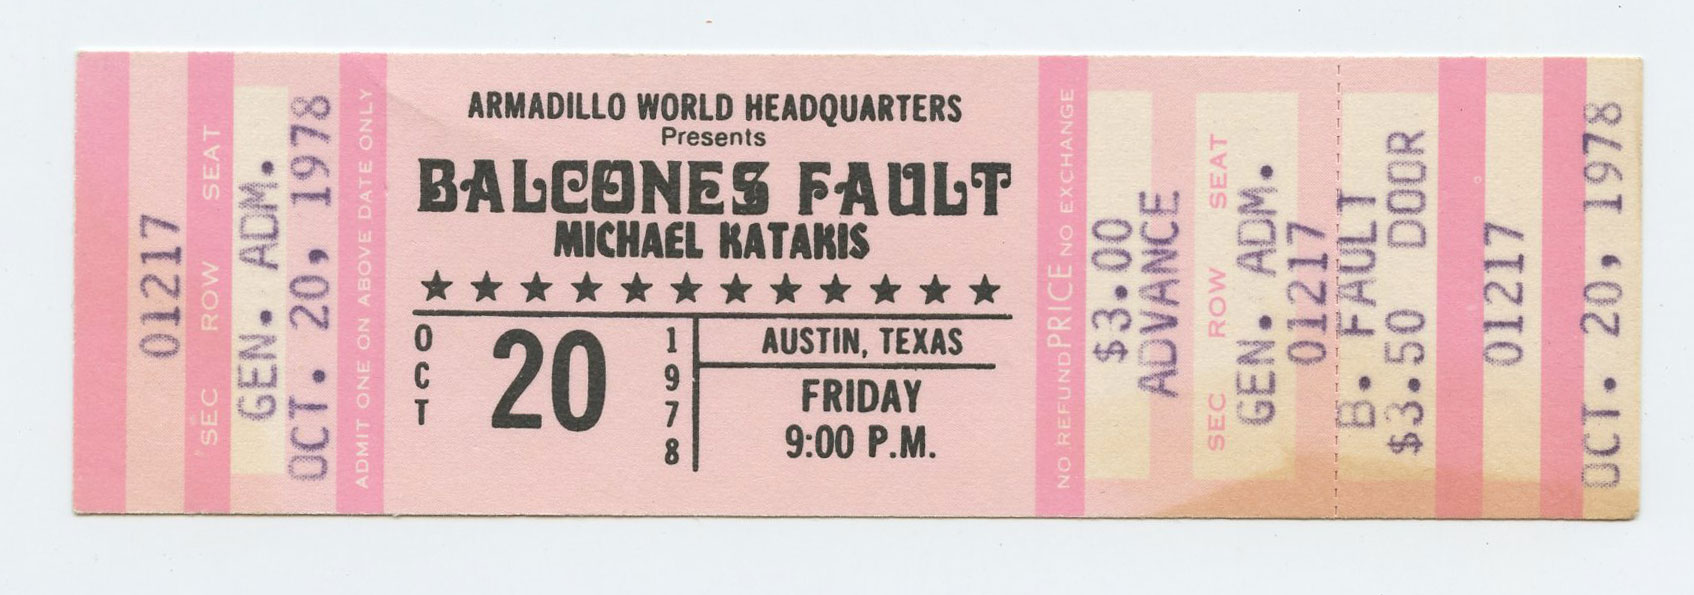 Balcones Fault Vintage Ticket 1978 Oct 20 Armadillo World Headquaters Austin TX 